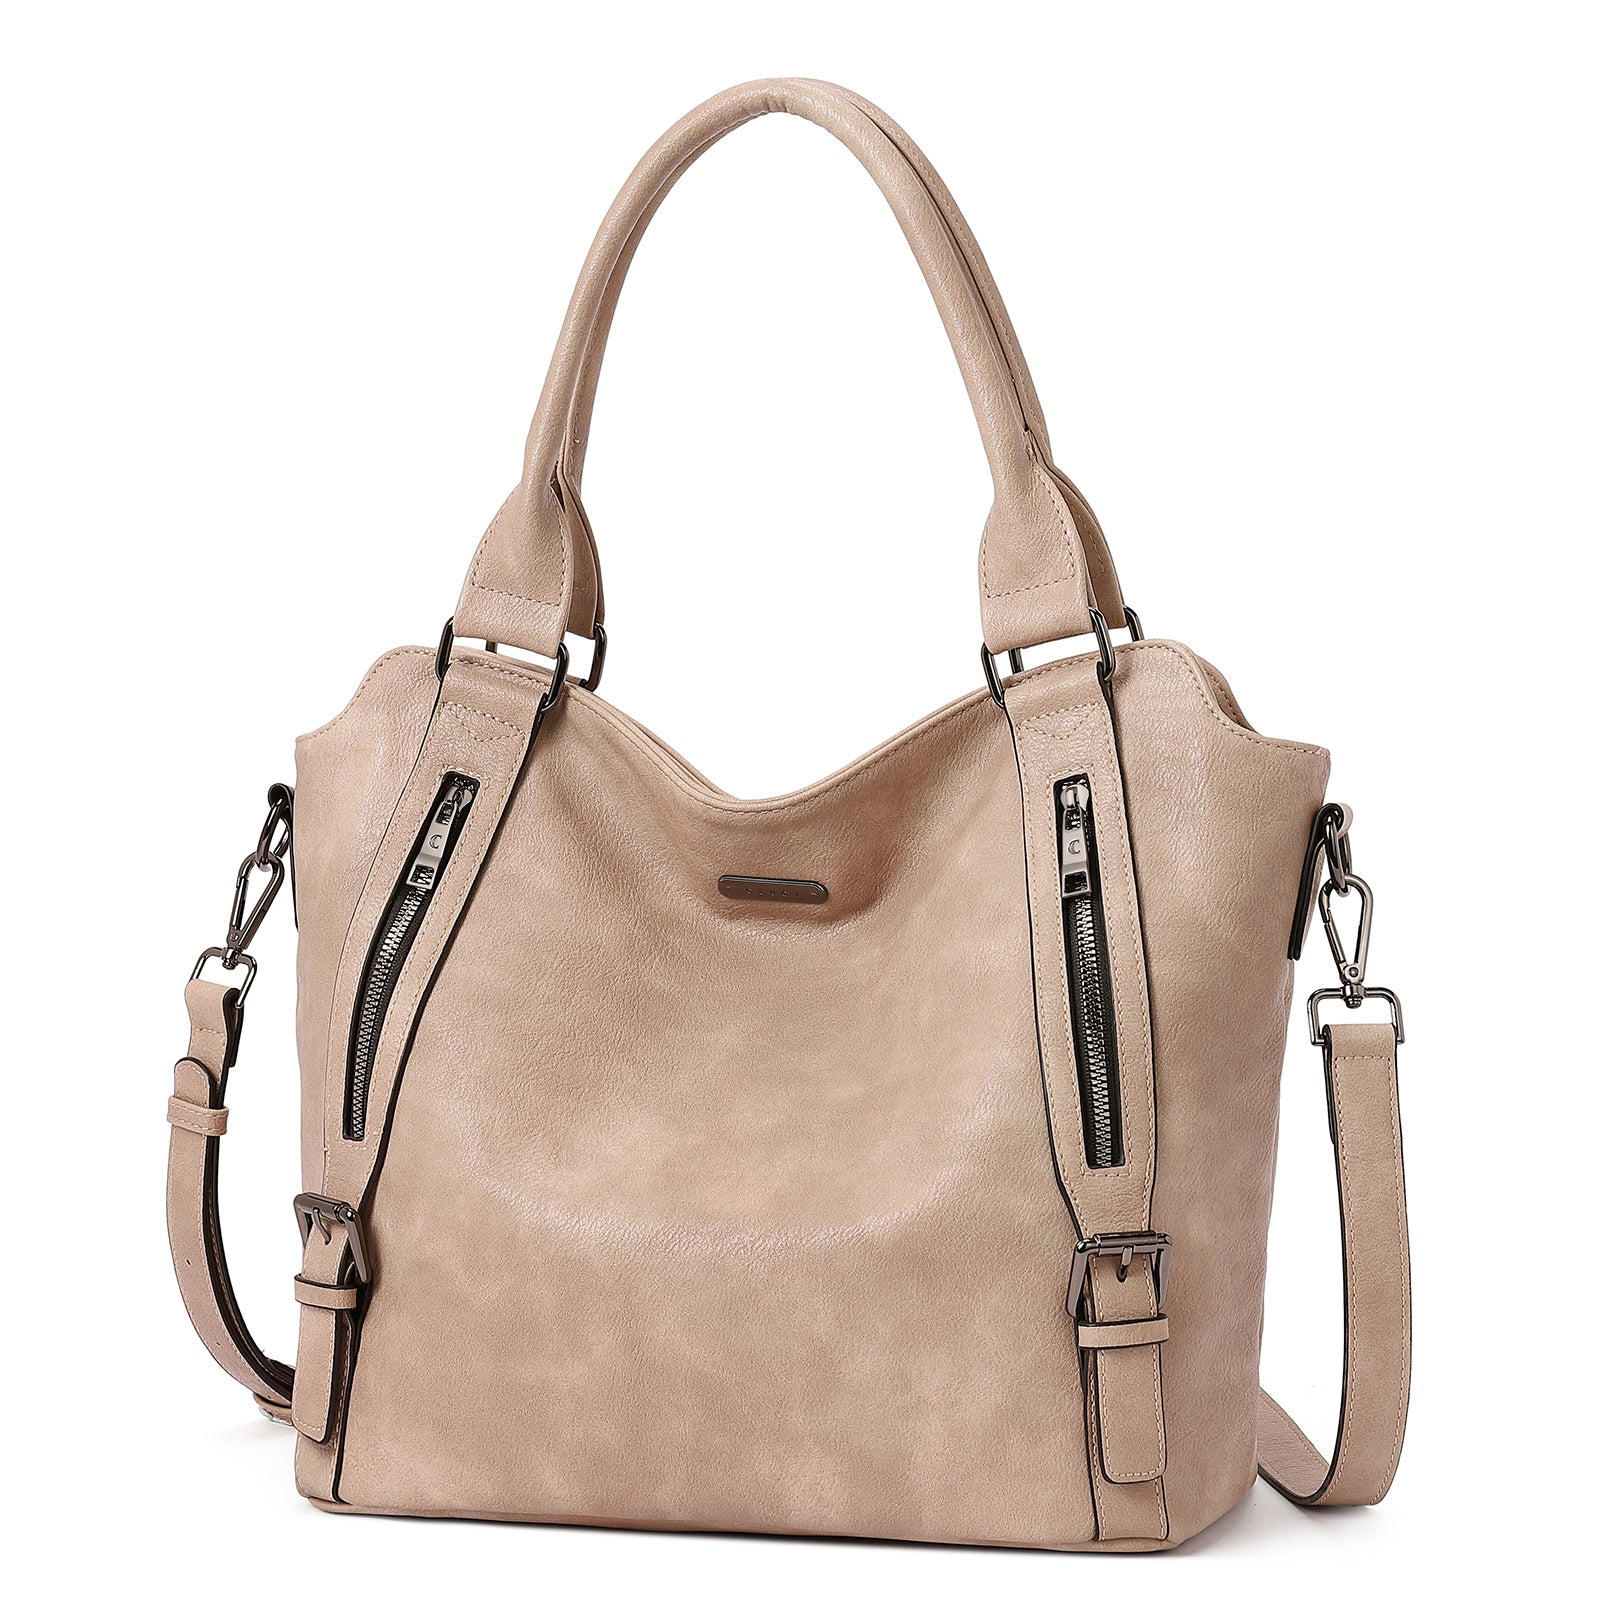 CLUCI Purses and Handbags for Women Vegan Leather Tote Bag Ladies Satc